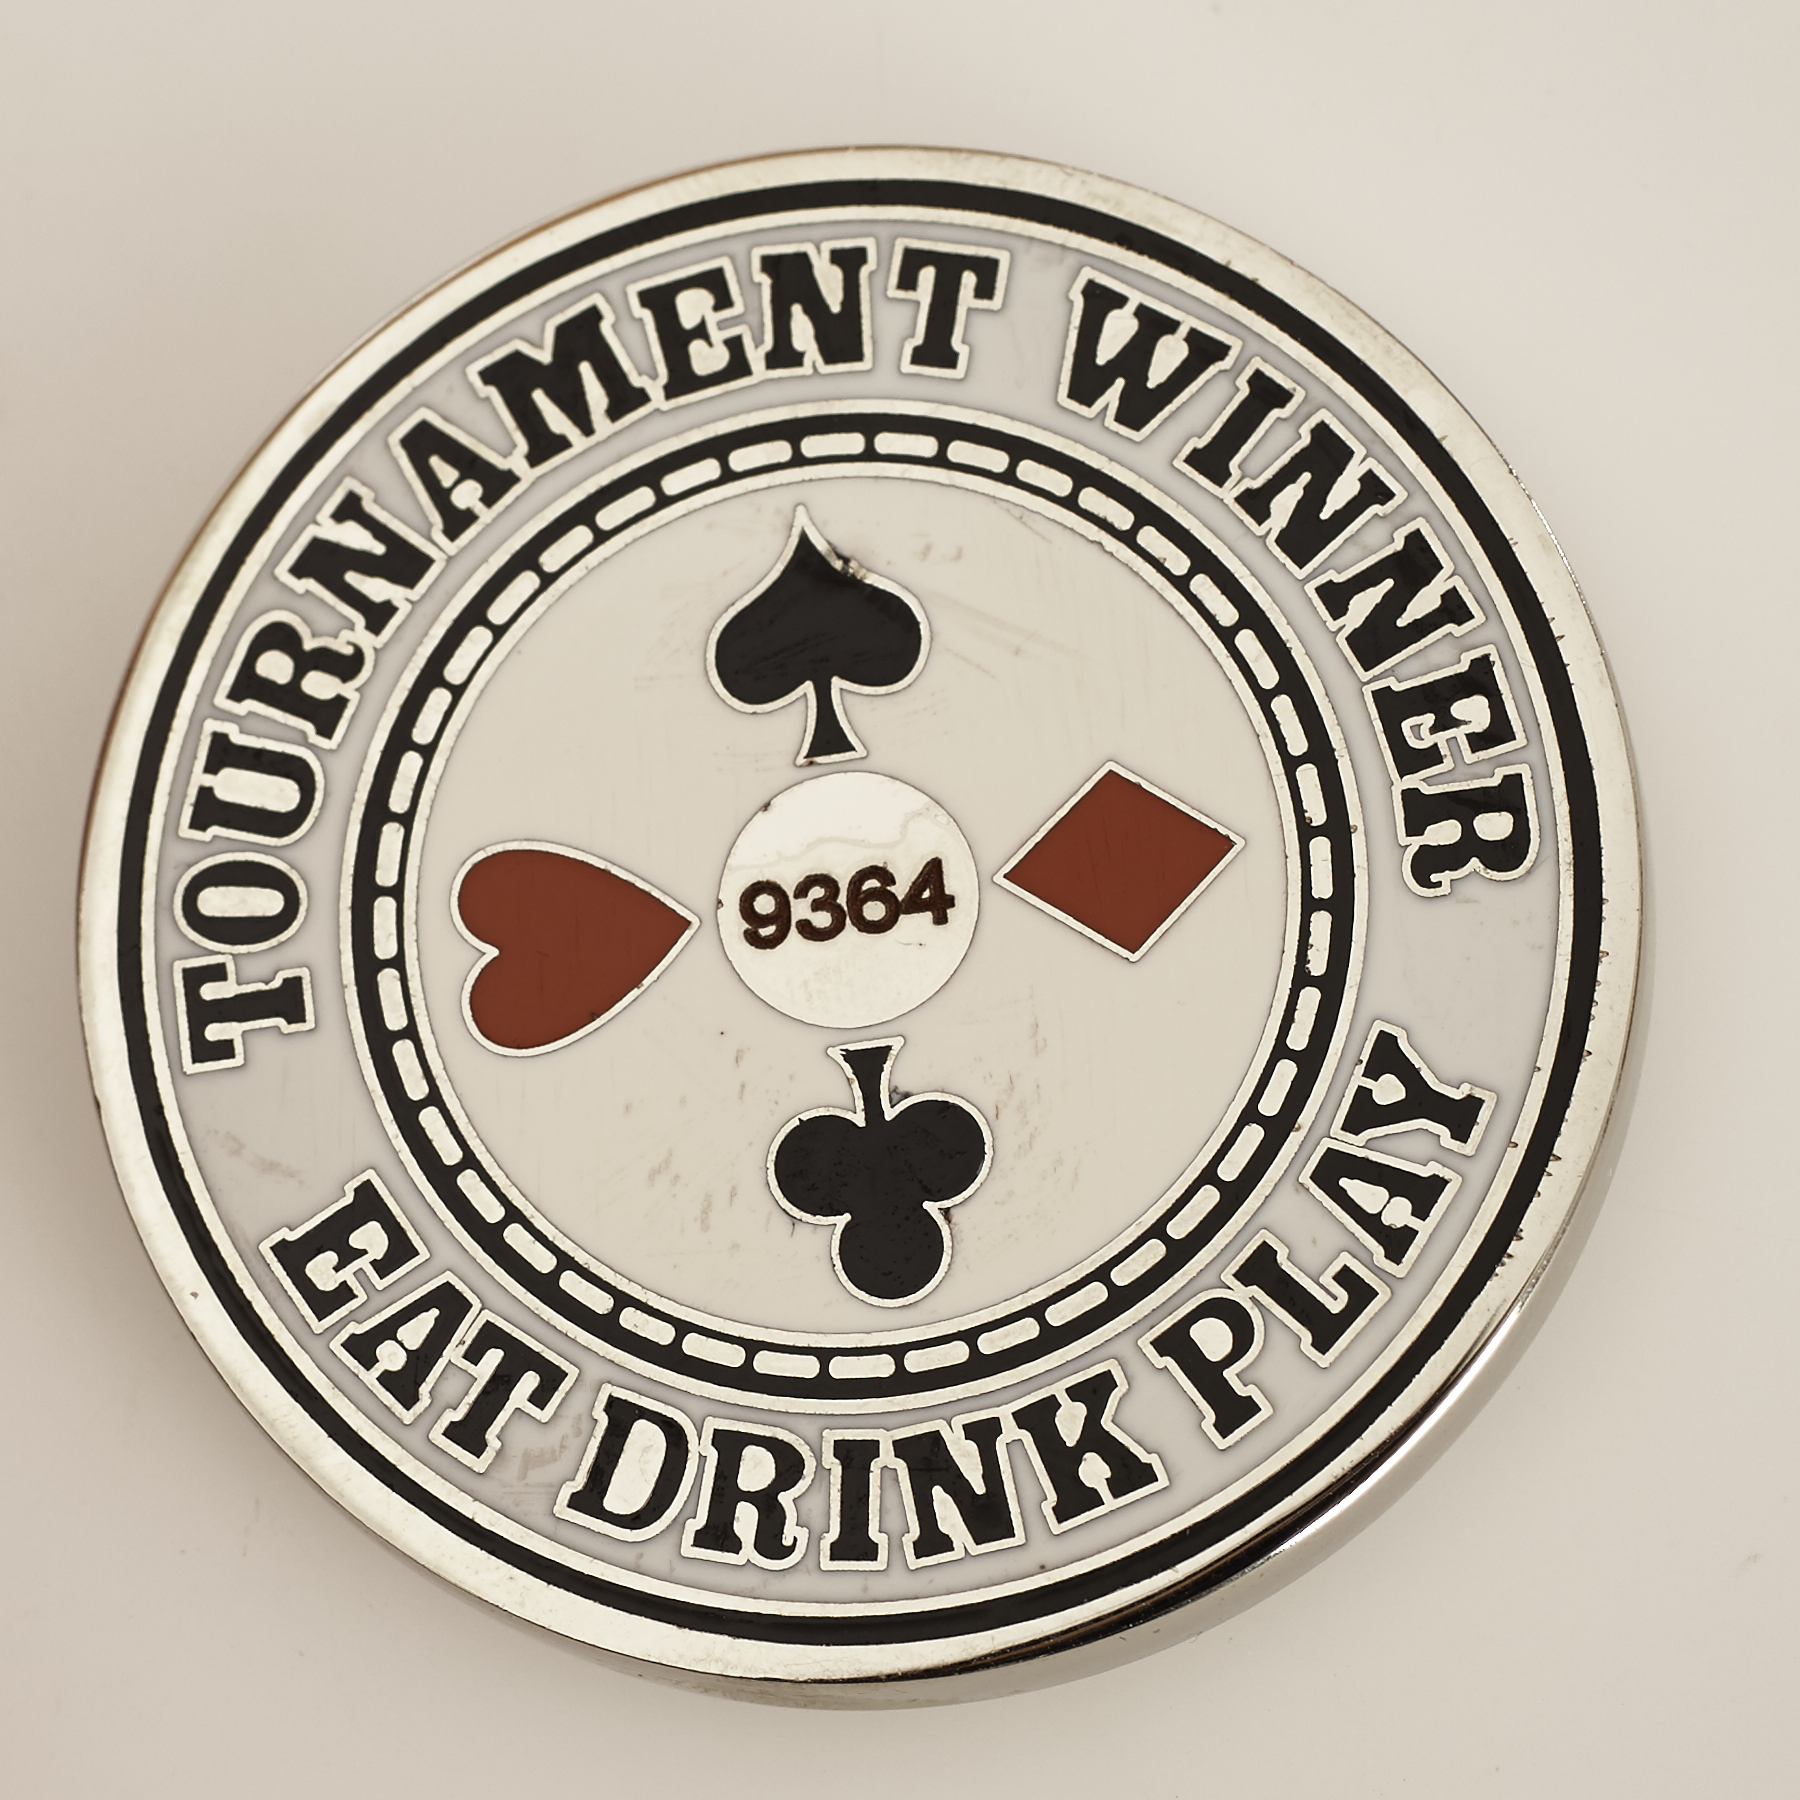 NPPL NATIONAL PUB POKER LEAGUE (No. 9364), TOURNAMENT WINNER, EAT DRINK PLAY, Poker Card Guard